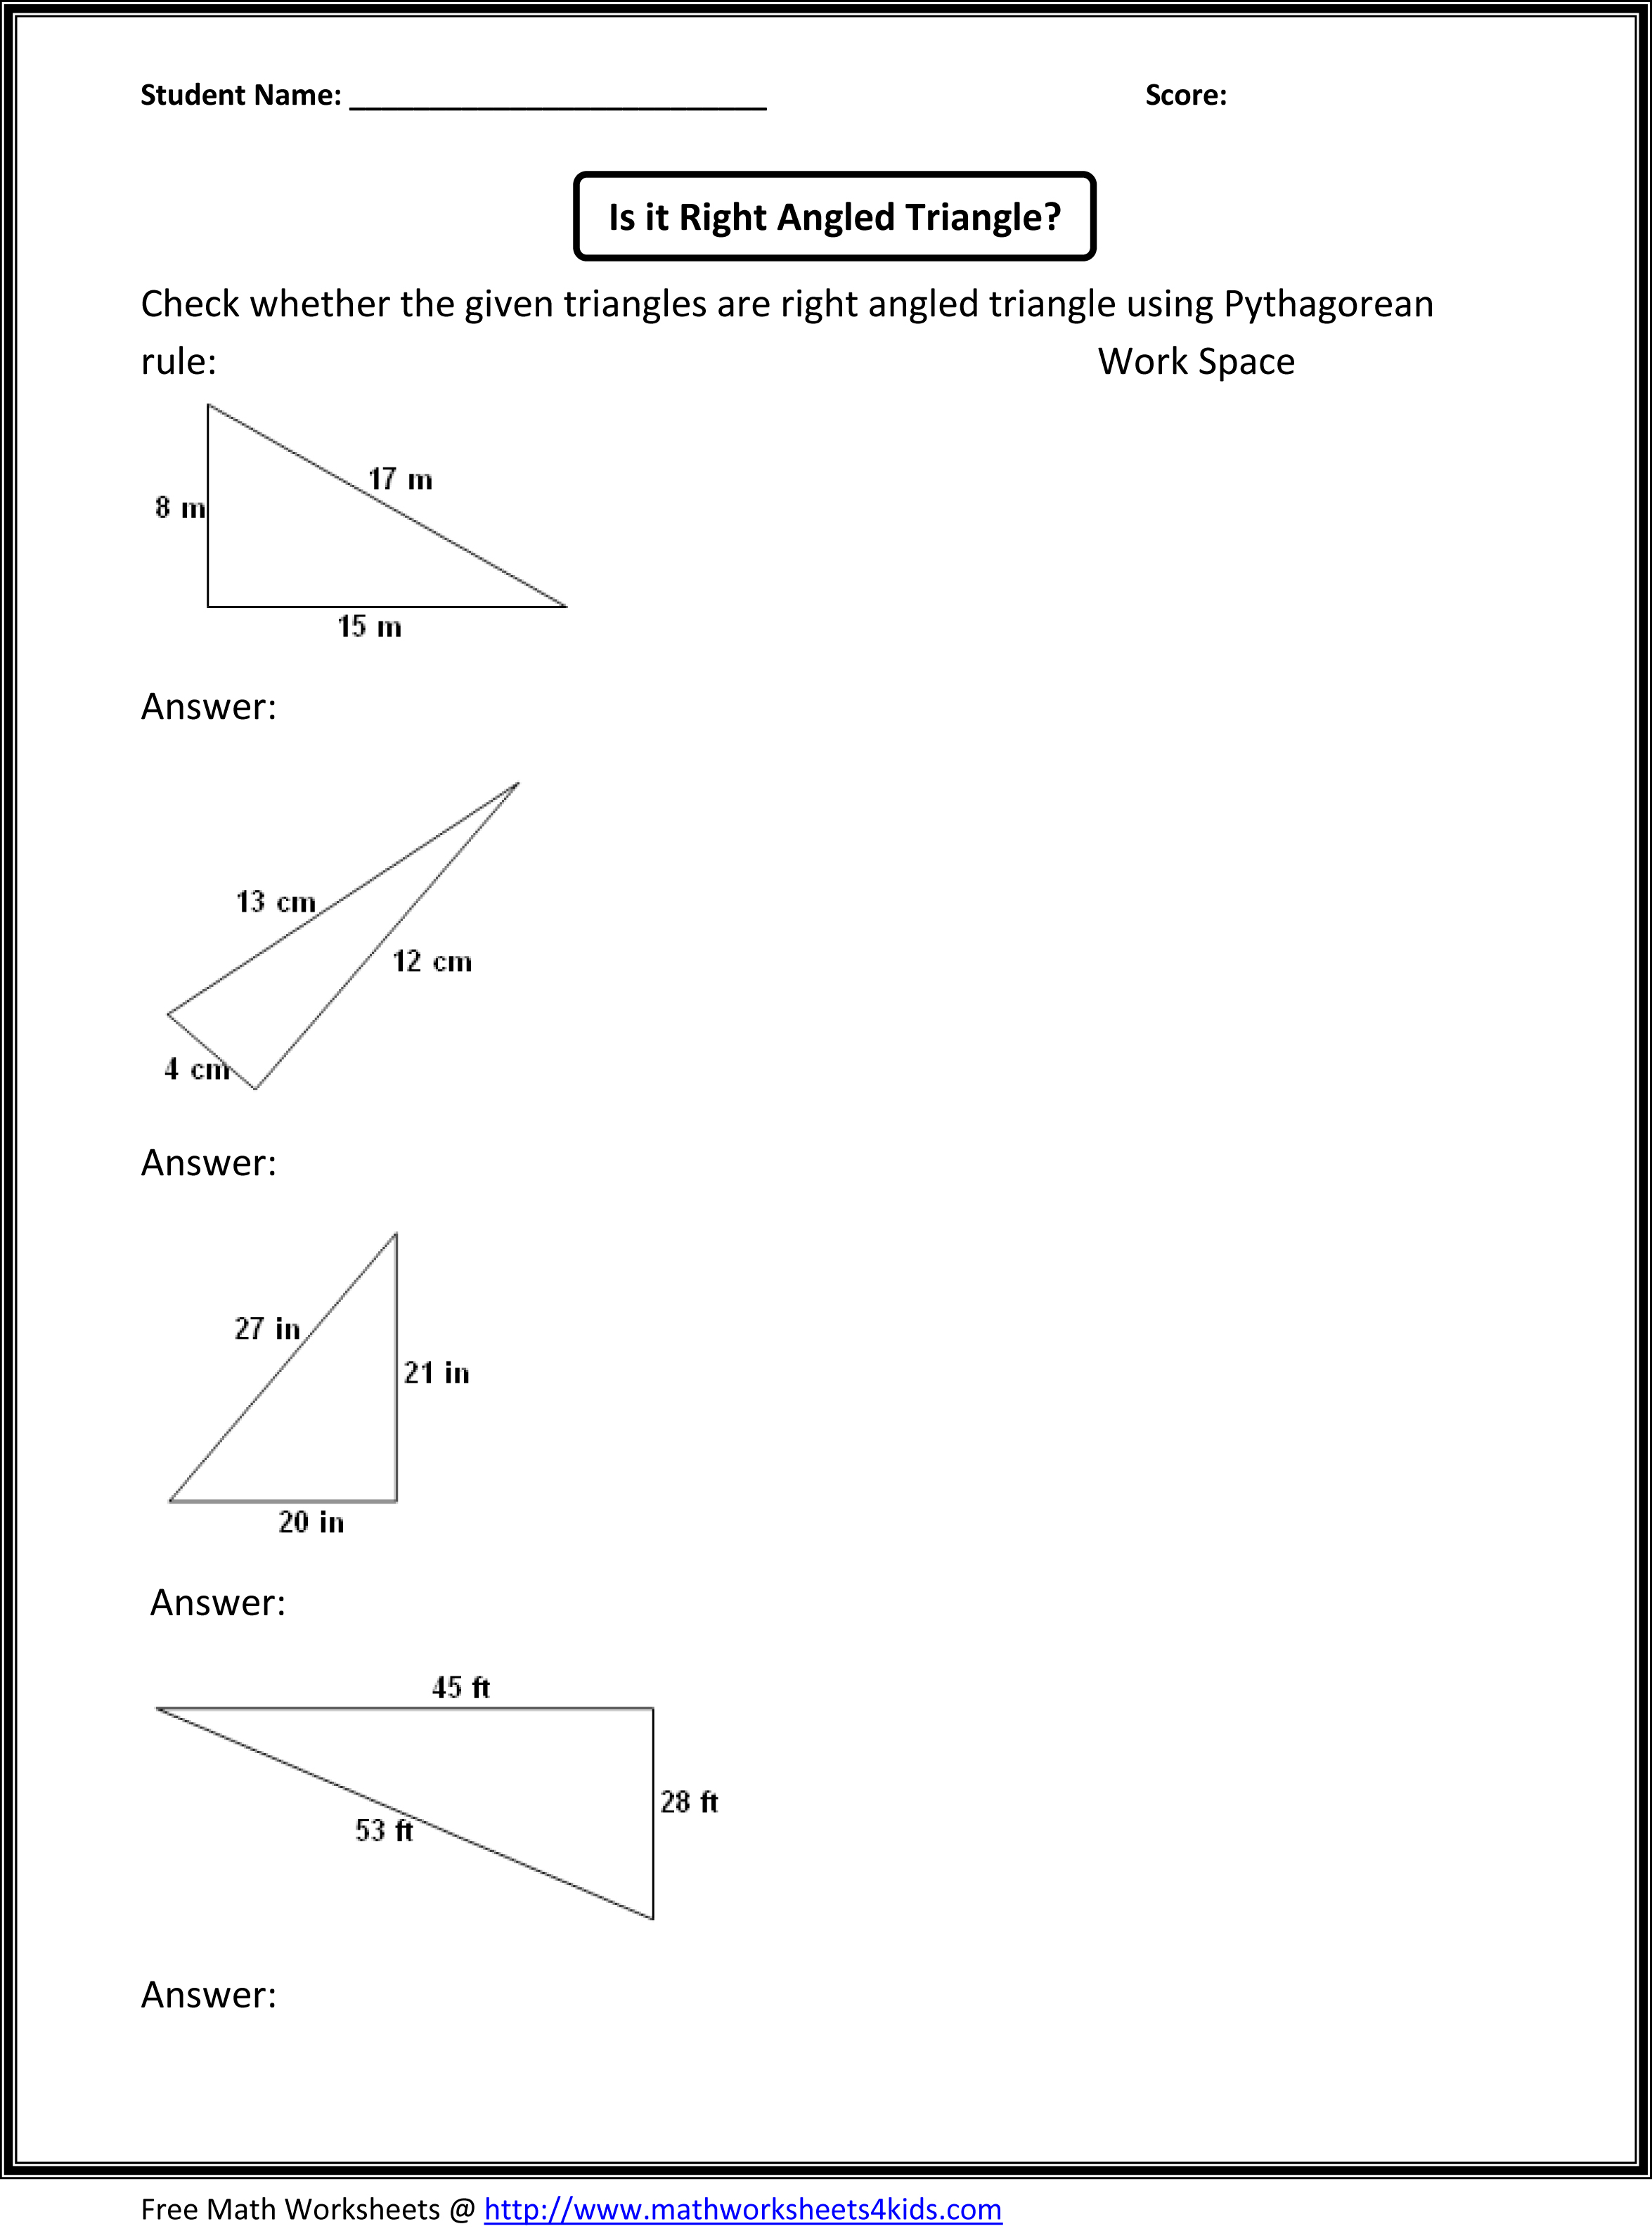 Pythagoras Theorem - Lessons - Blendspace Regarding Pythagorean Theorem Worksheet Answers